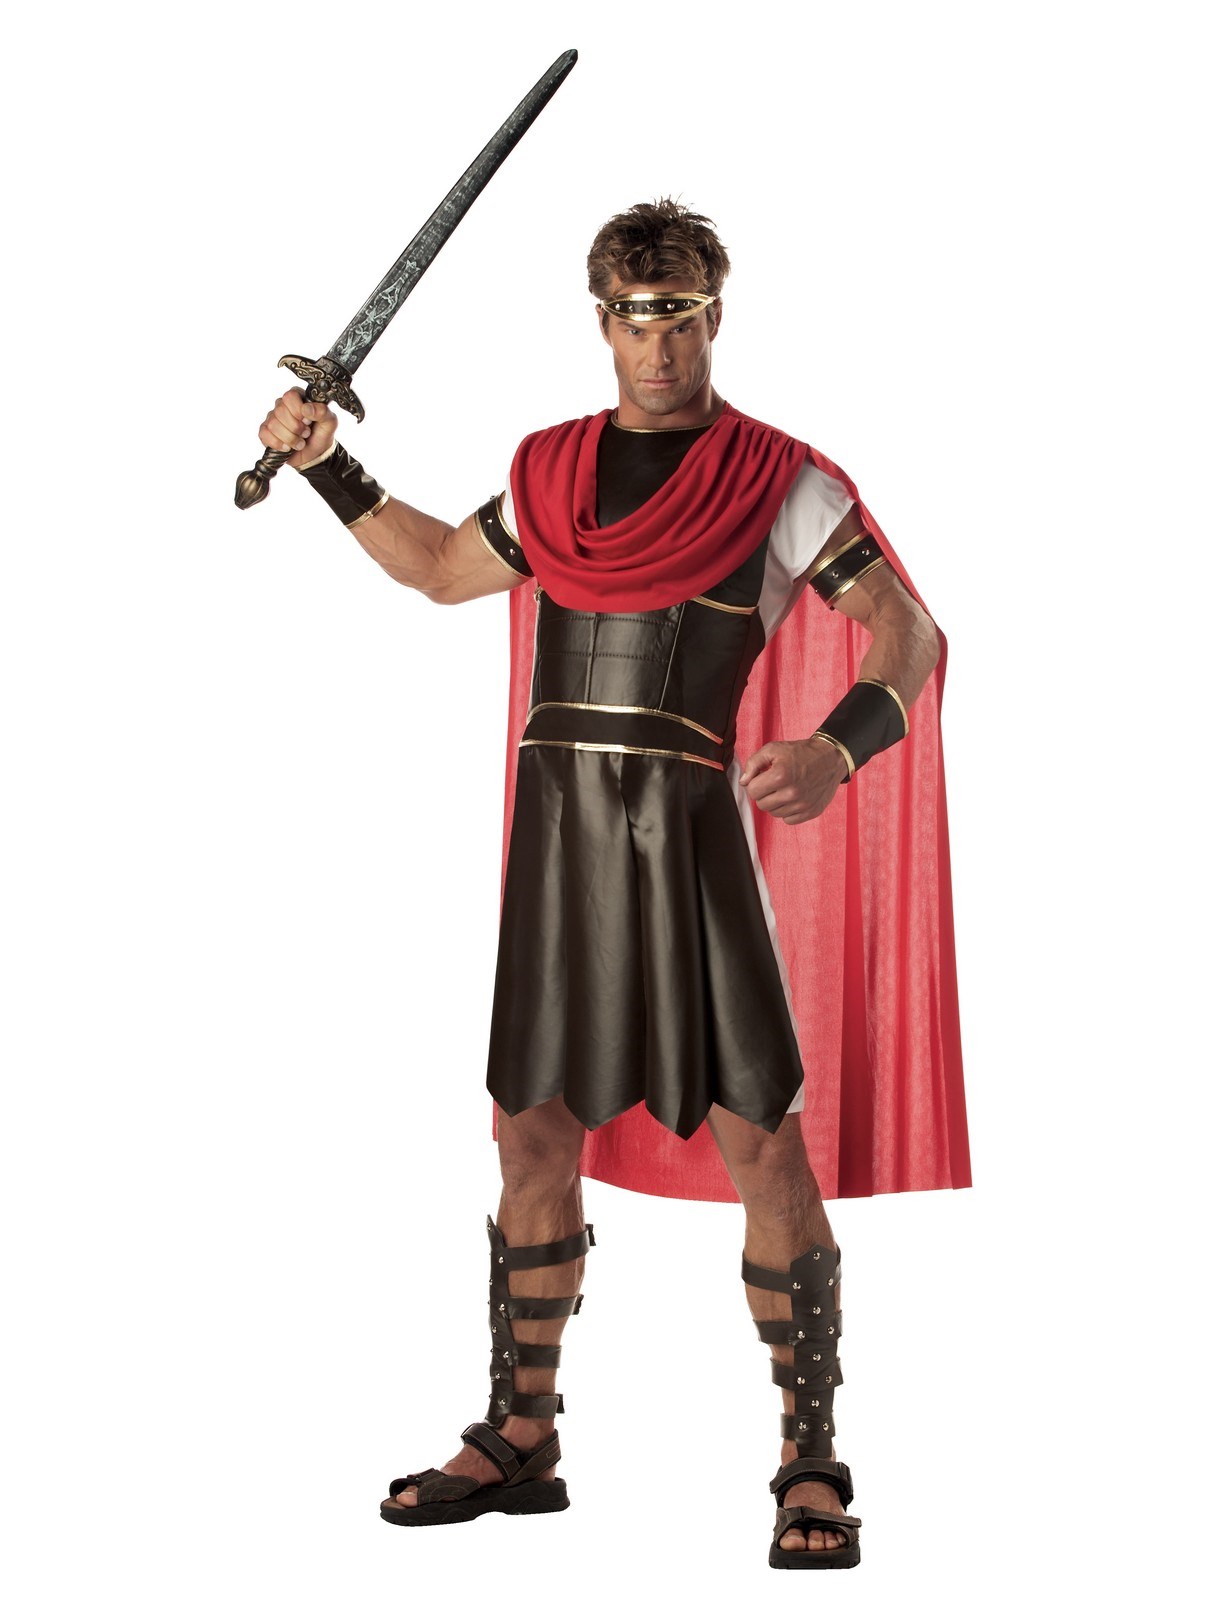 Hercules Adult Costume